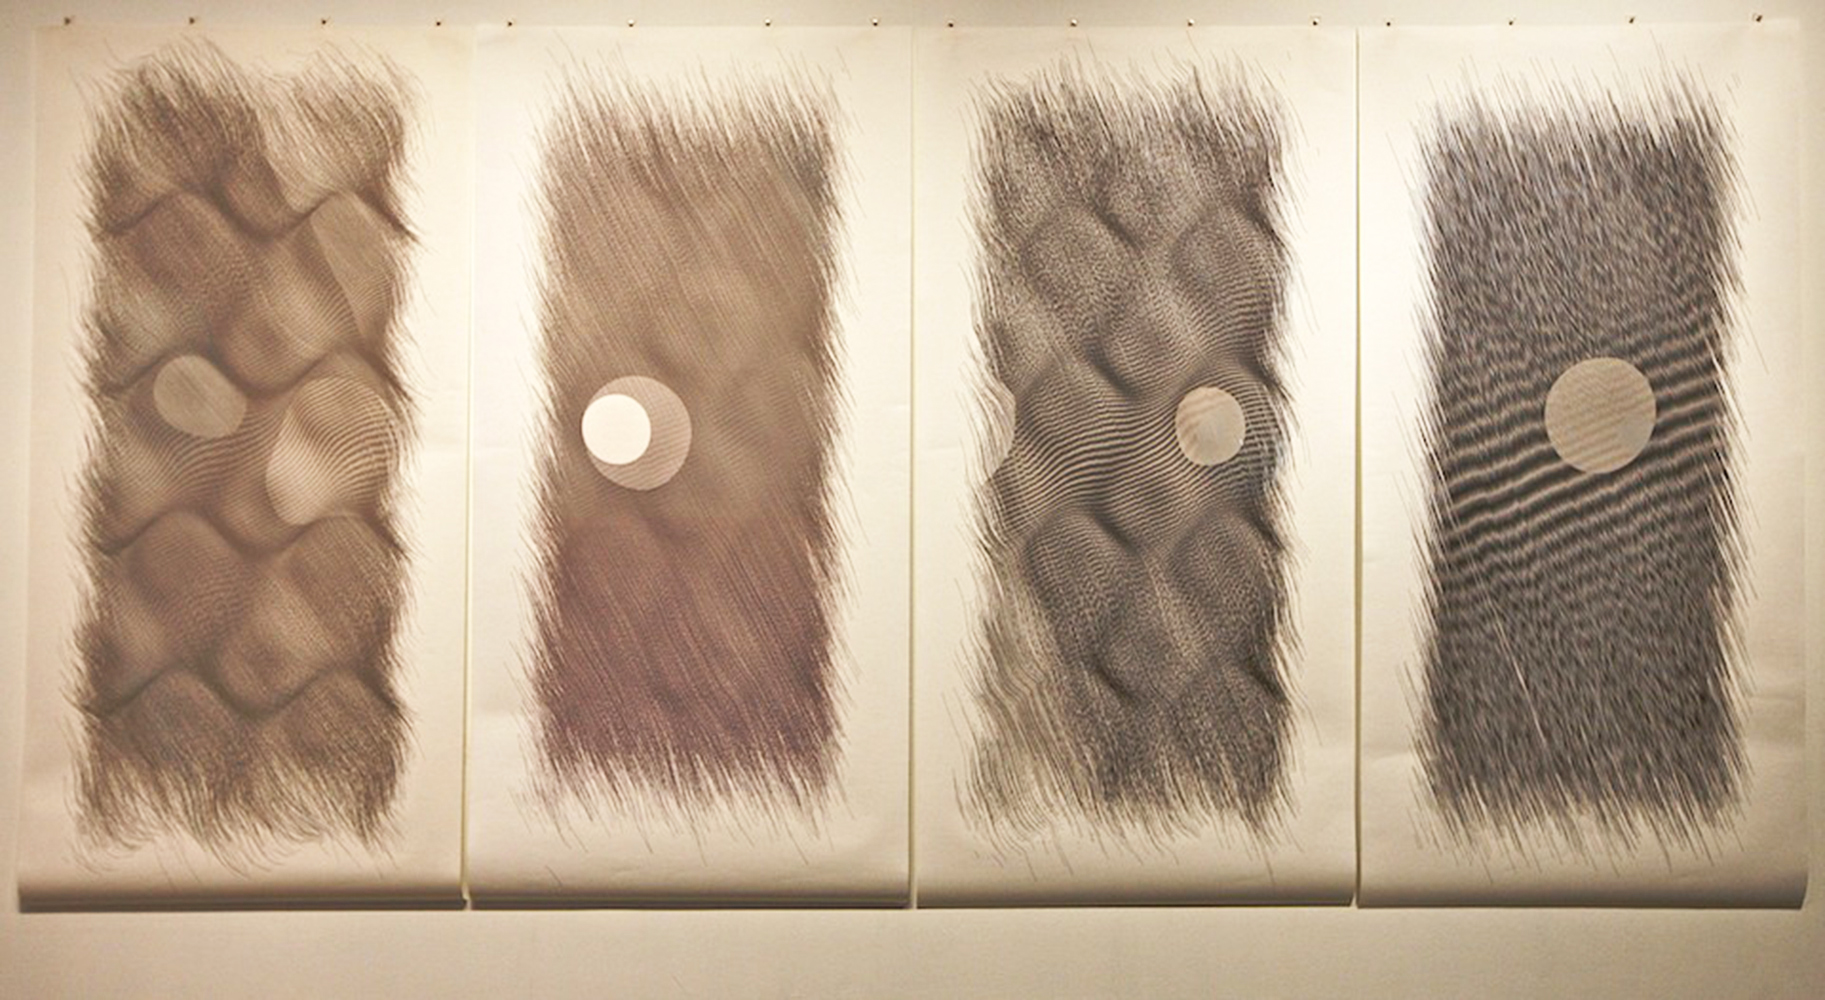   Wavelets    Ink on paper - pen plotter drawing    Art : 76”x152” total (4 panels 76”x38” each)    Paper : Torinoko  